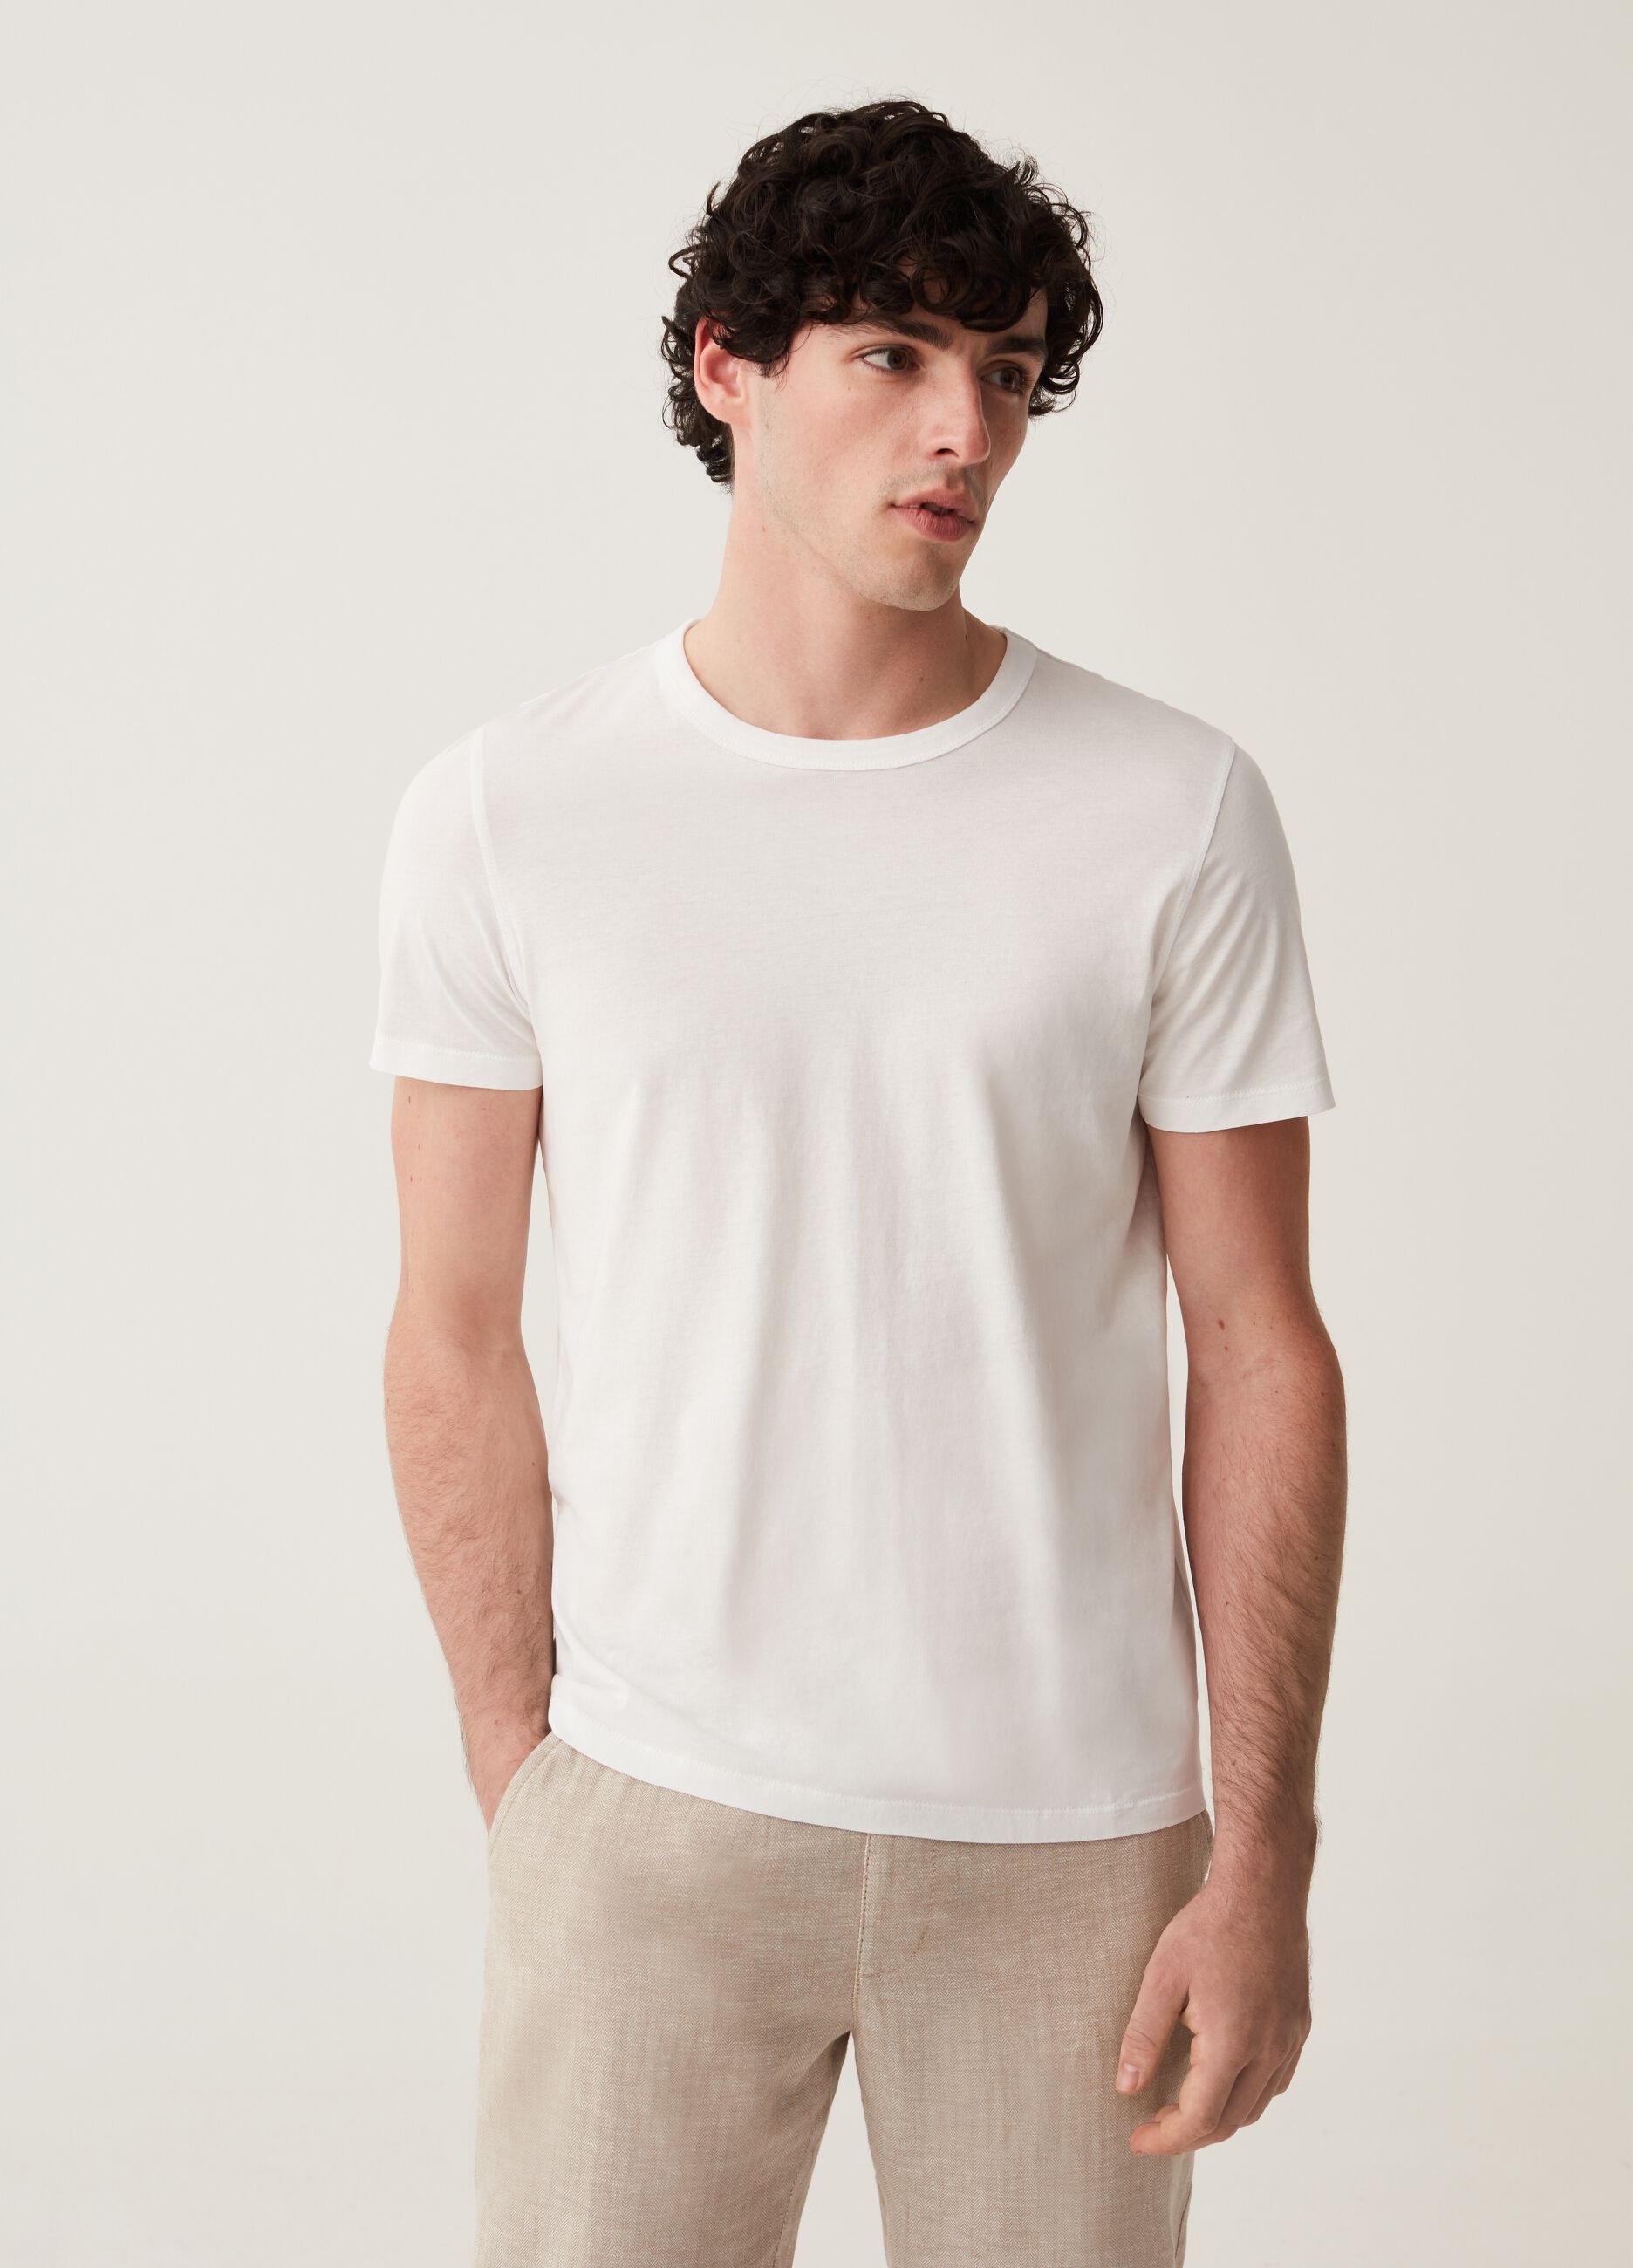 Premium cotton T-shirt